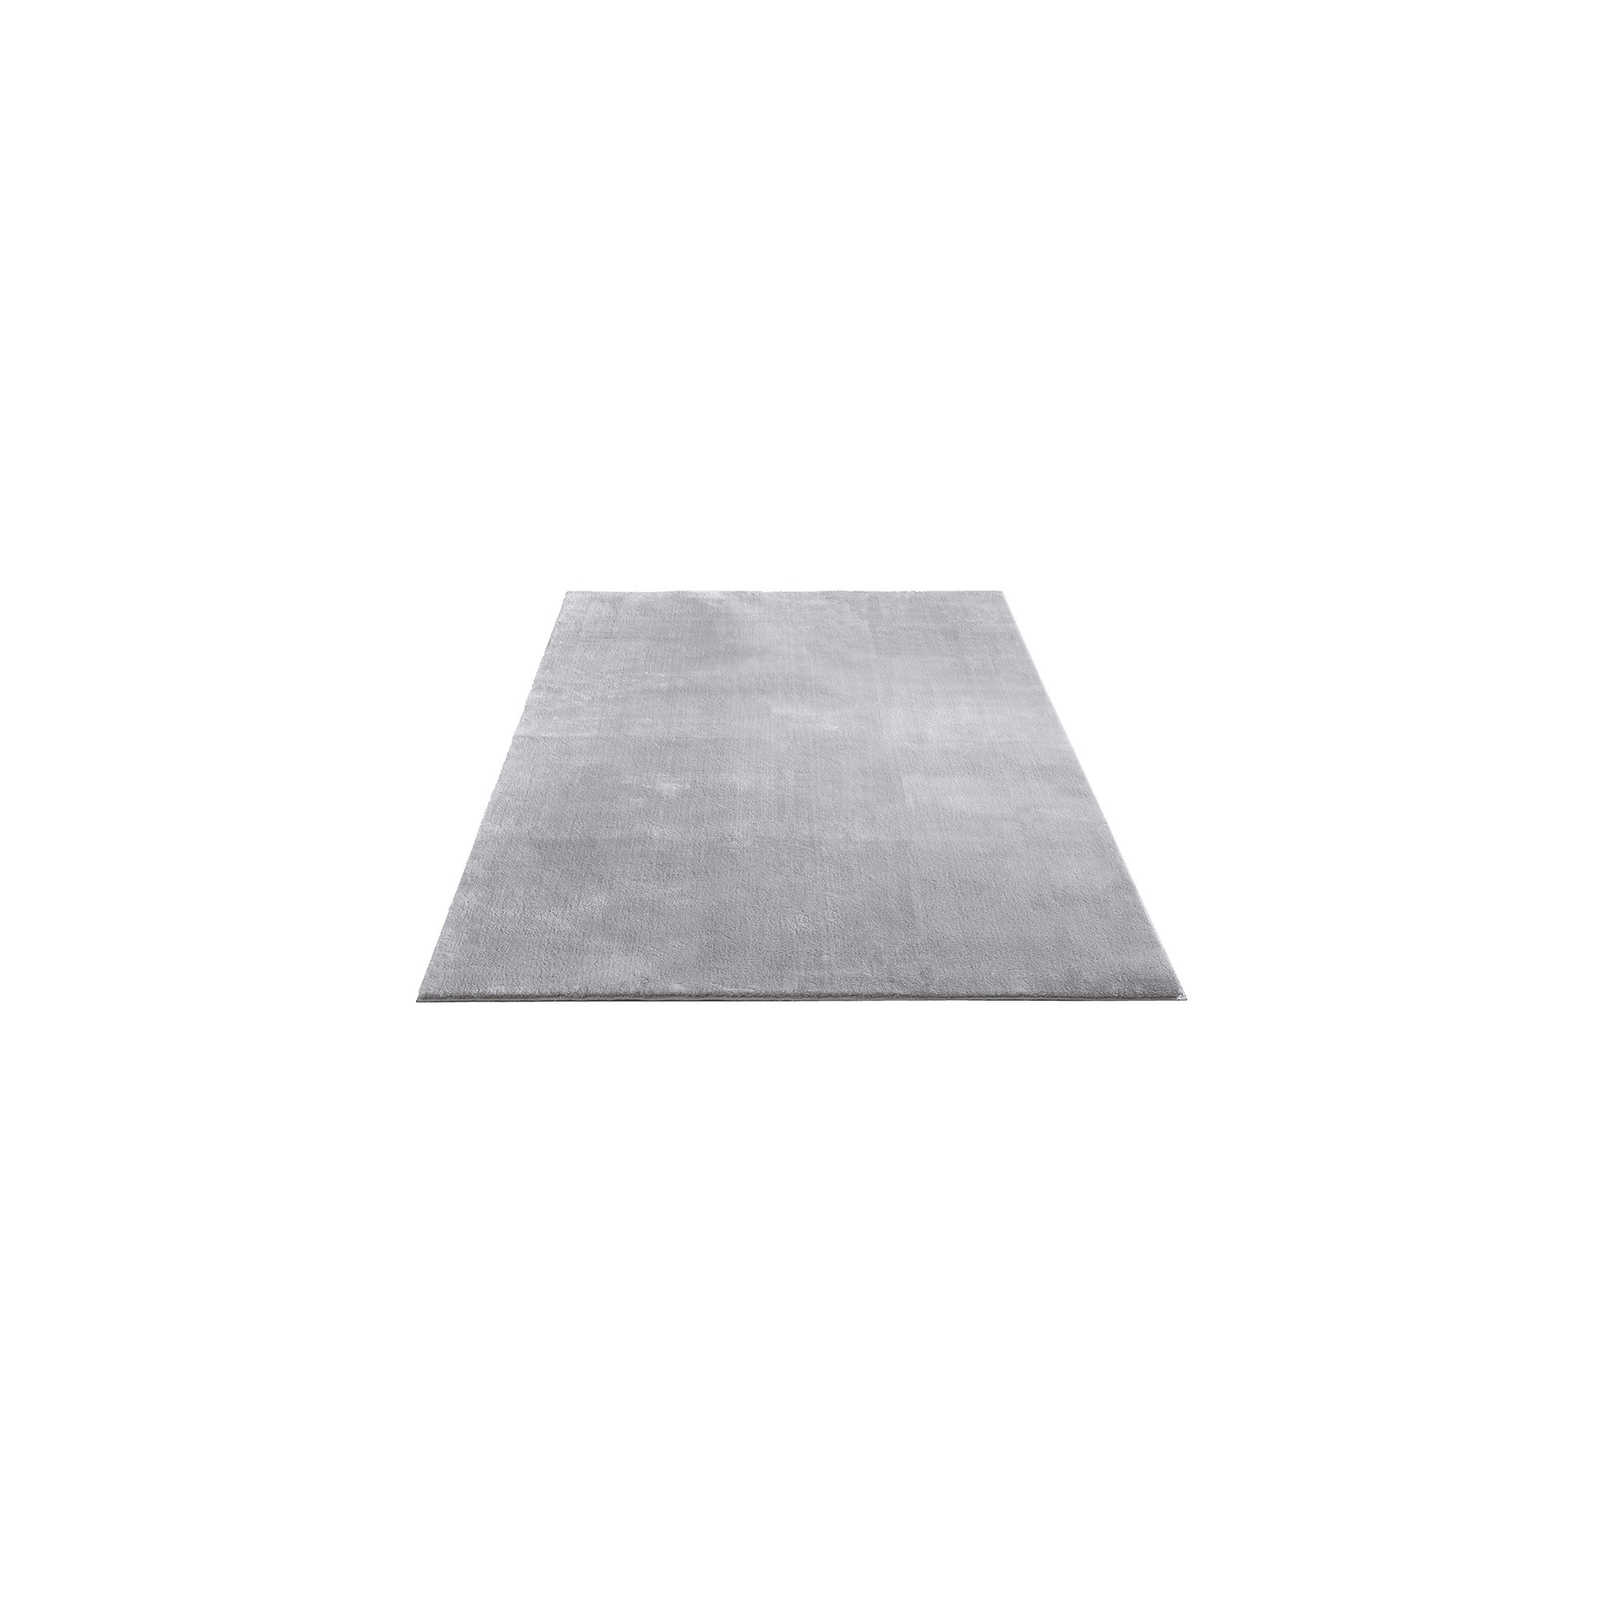 Feiner Hochflor Teppich in Grau – 170 x 120 cm
